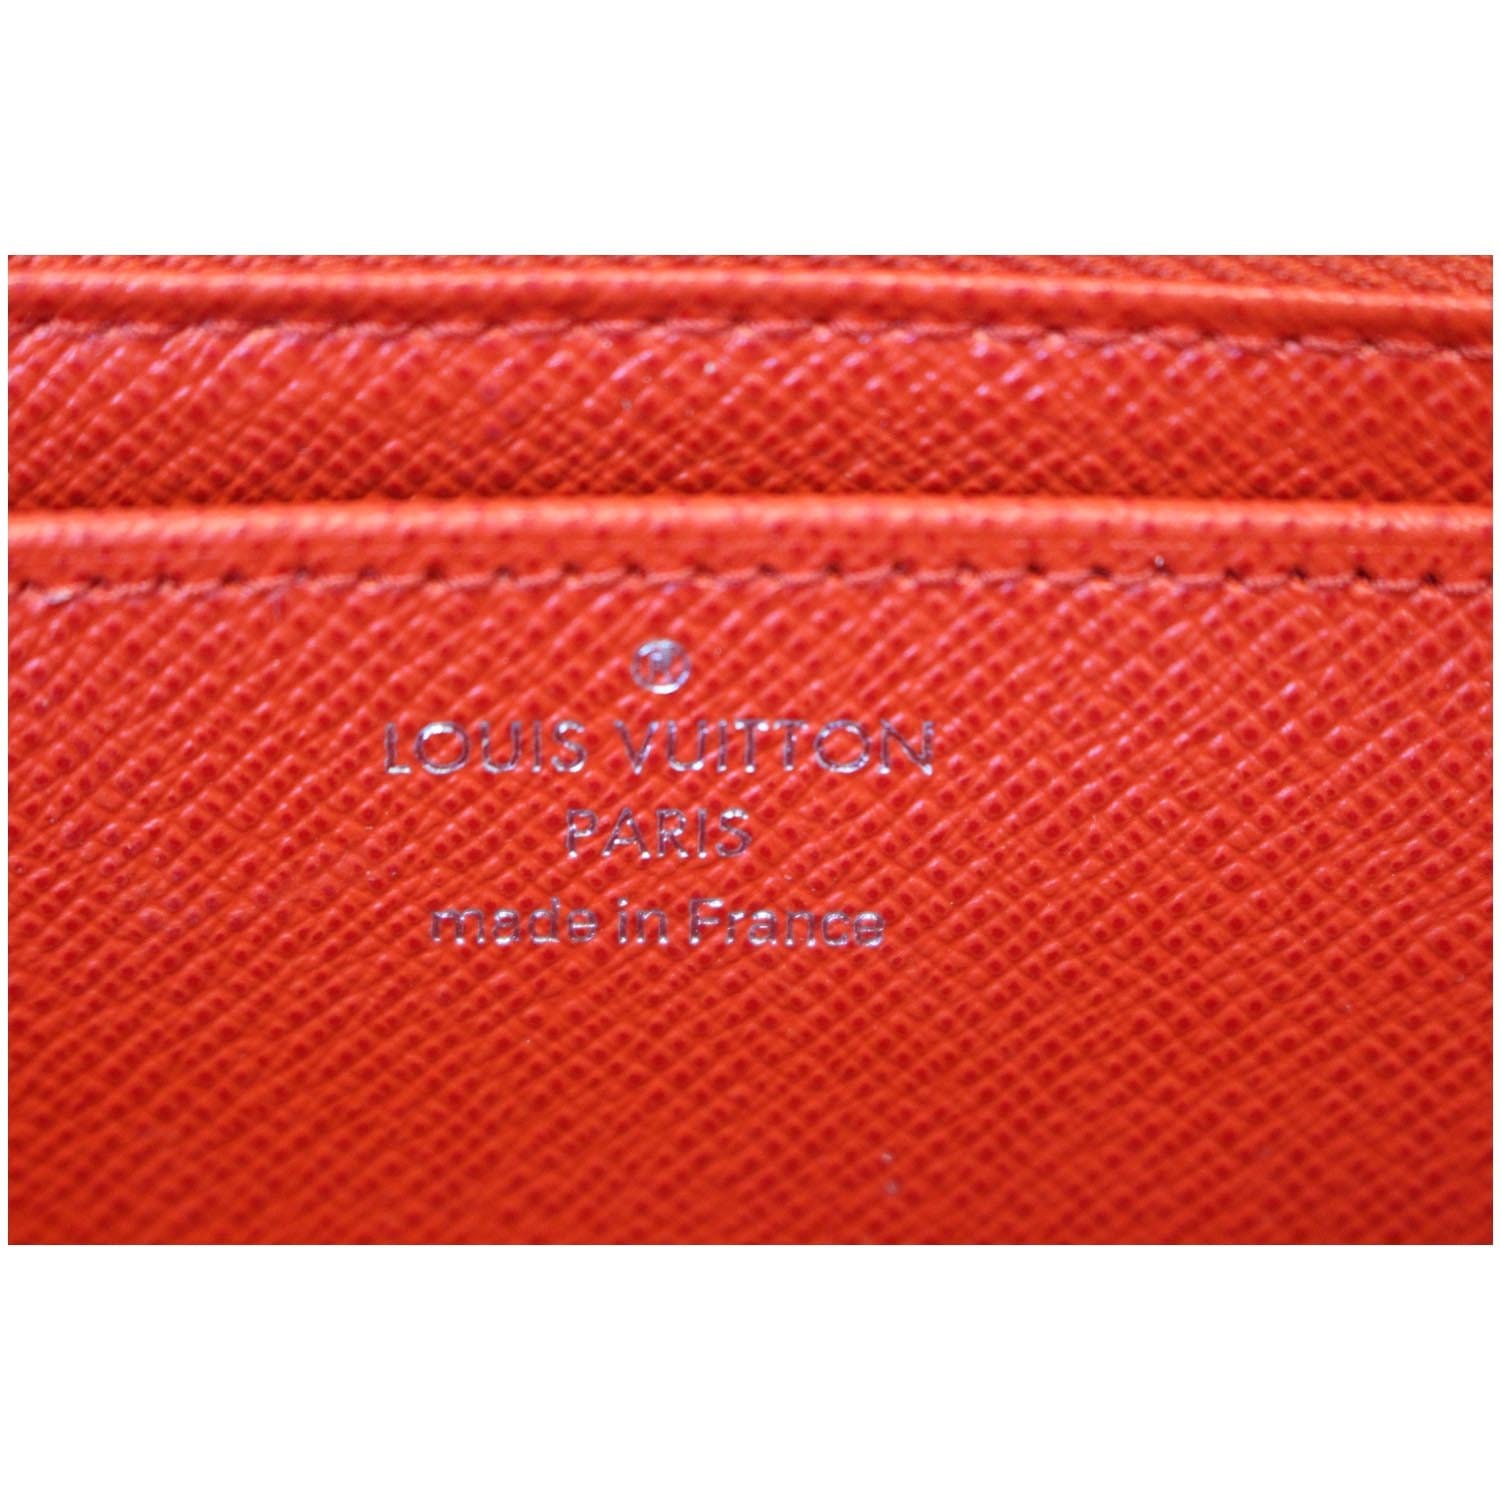 Poshbag Boutique - This Louis Vuitton Twist Wallet is in durable